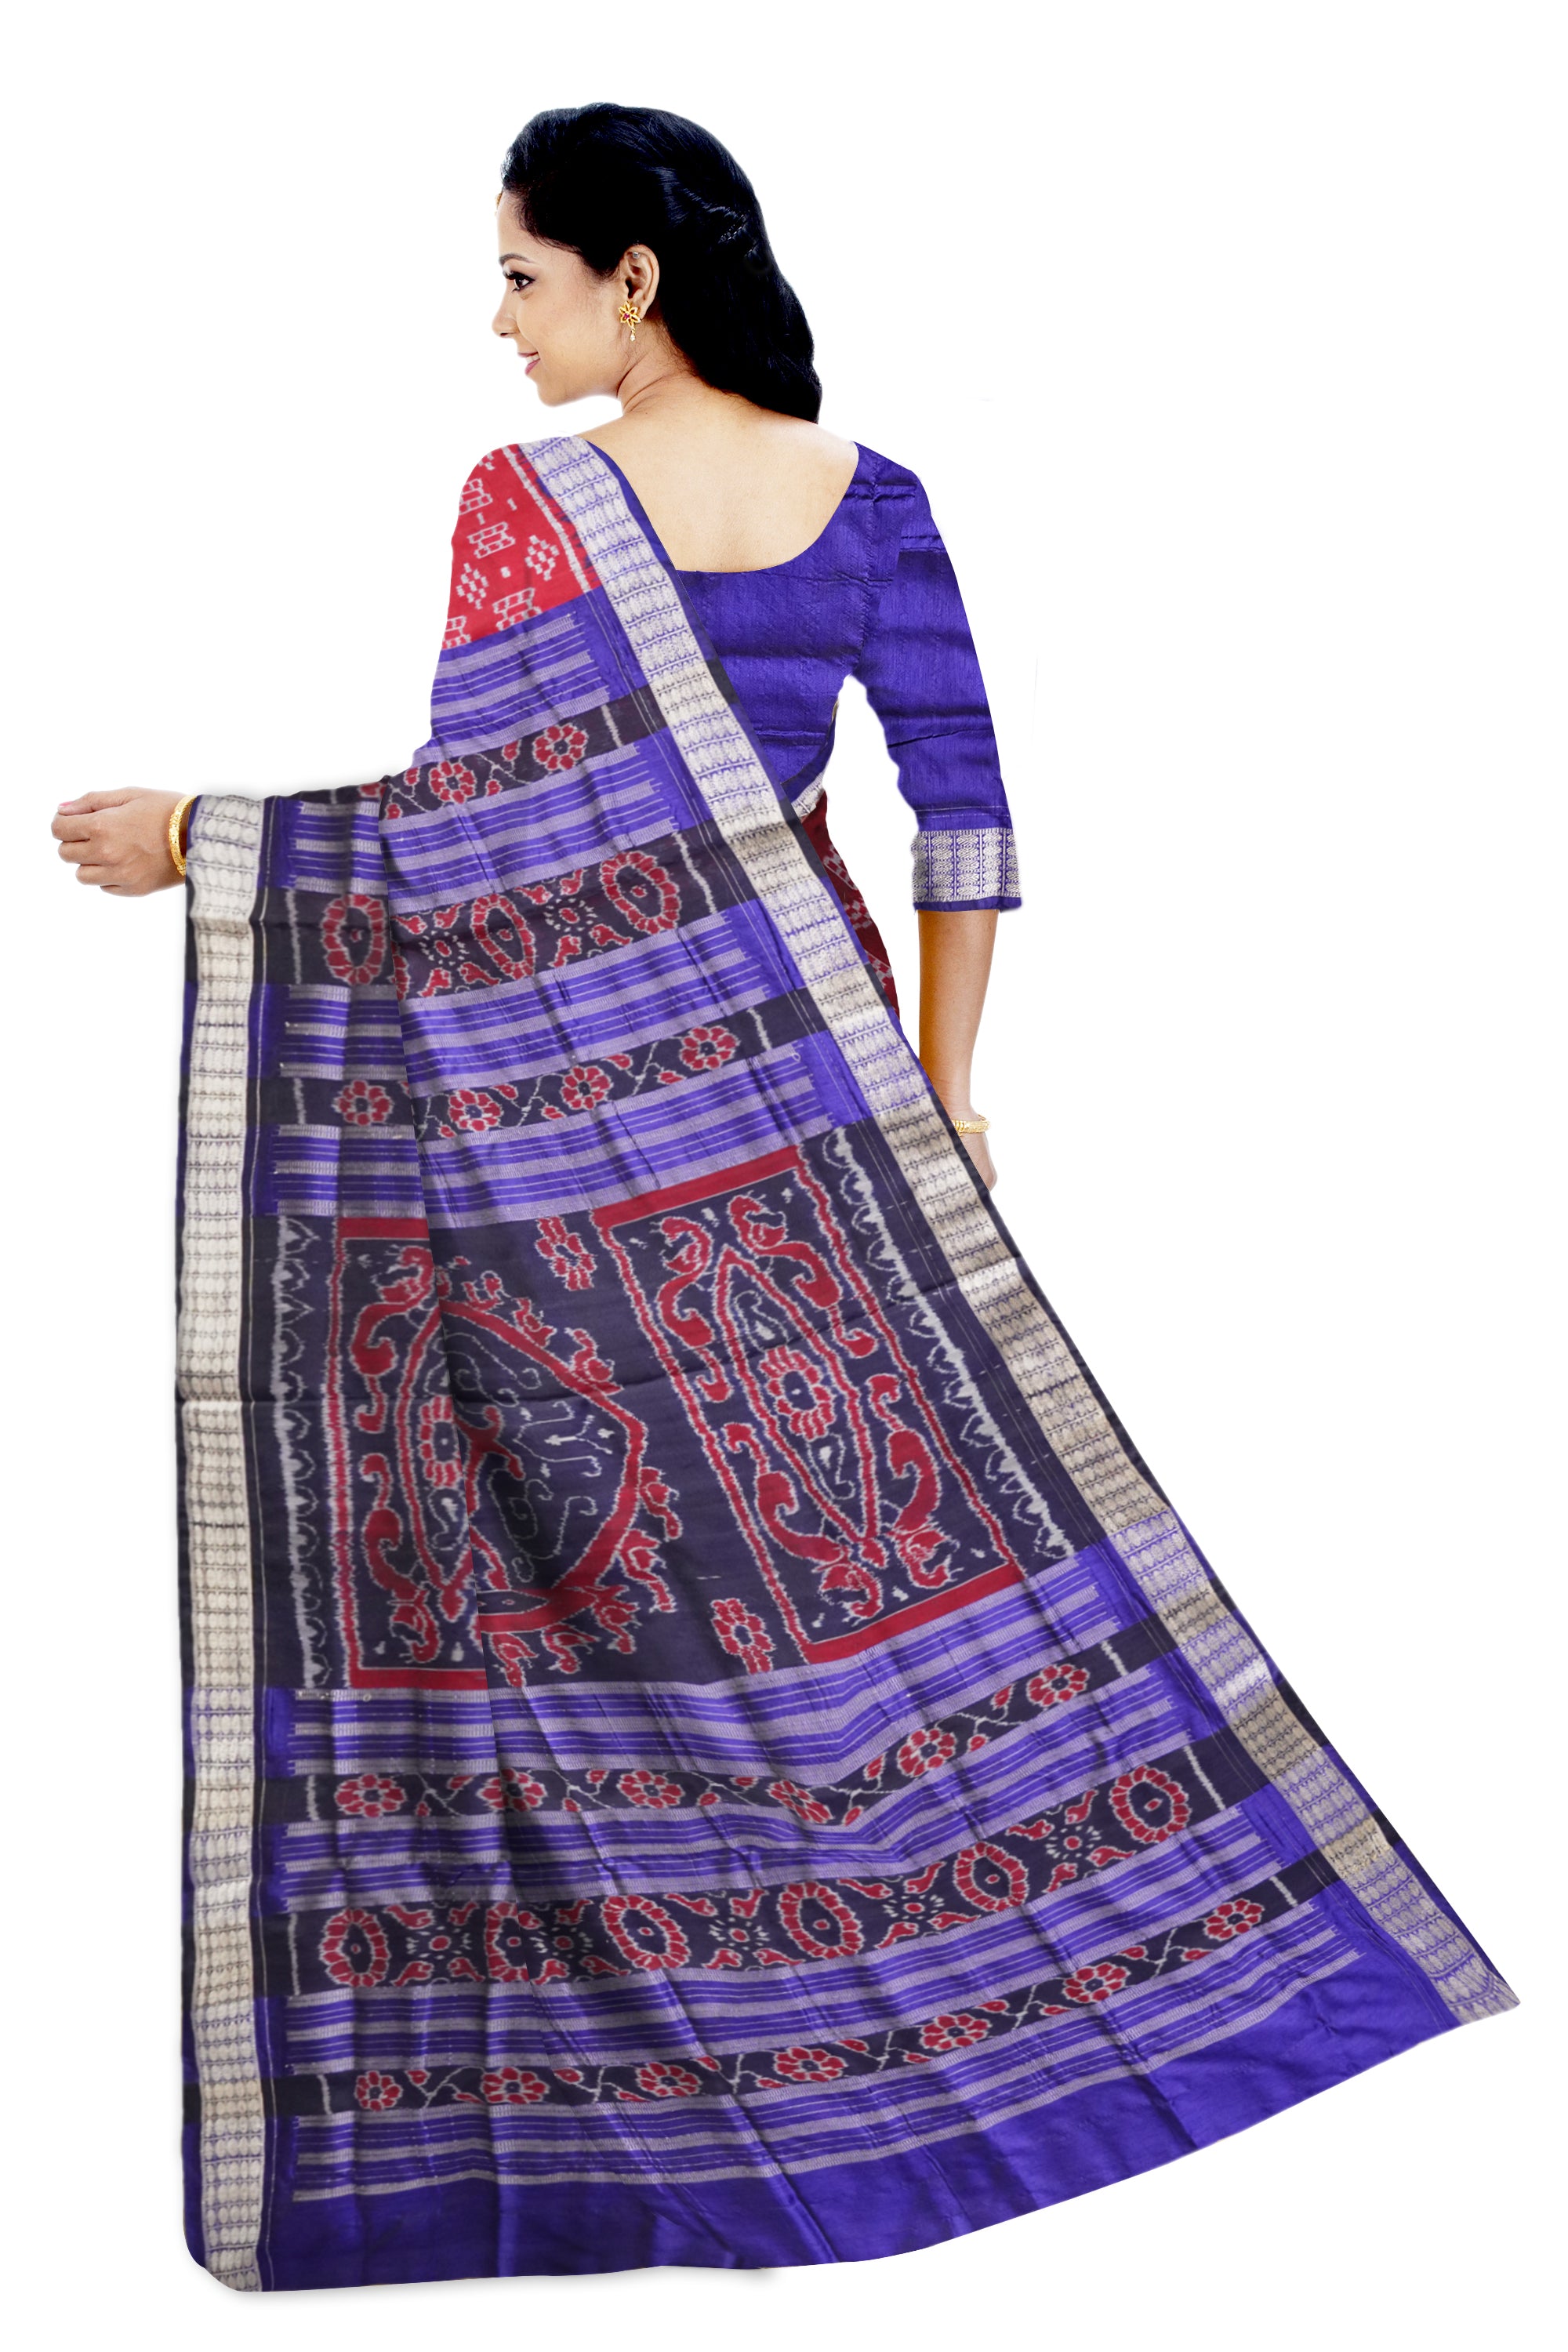 Maroon and blue pasapali saree, peacock design on pallu. - Koshali Arts & Crafts Enterprise